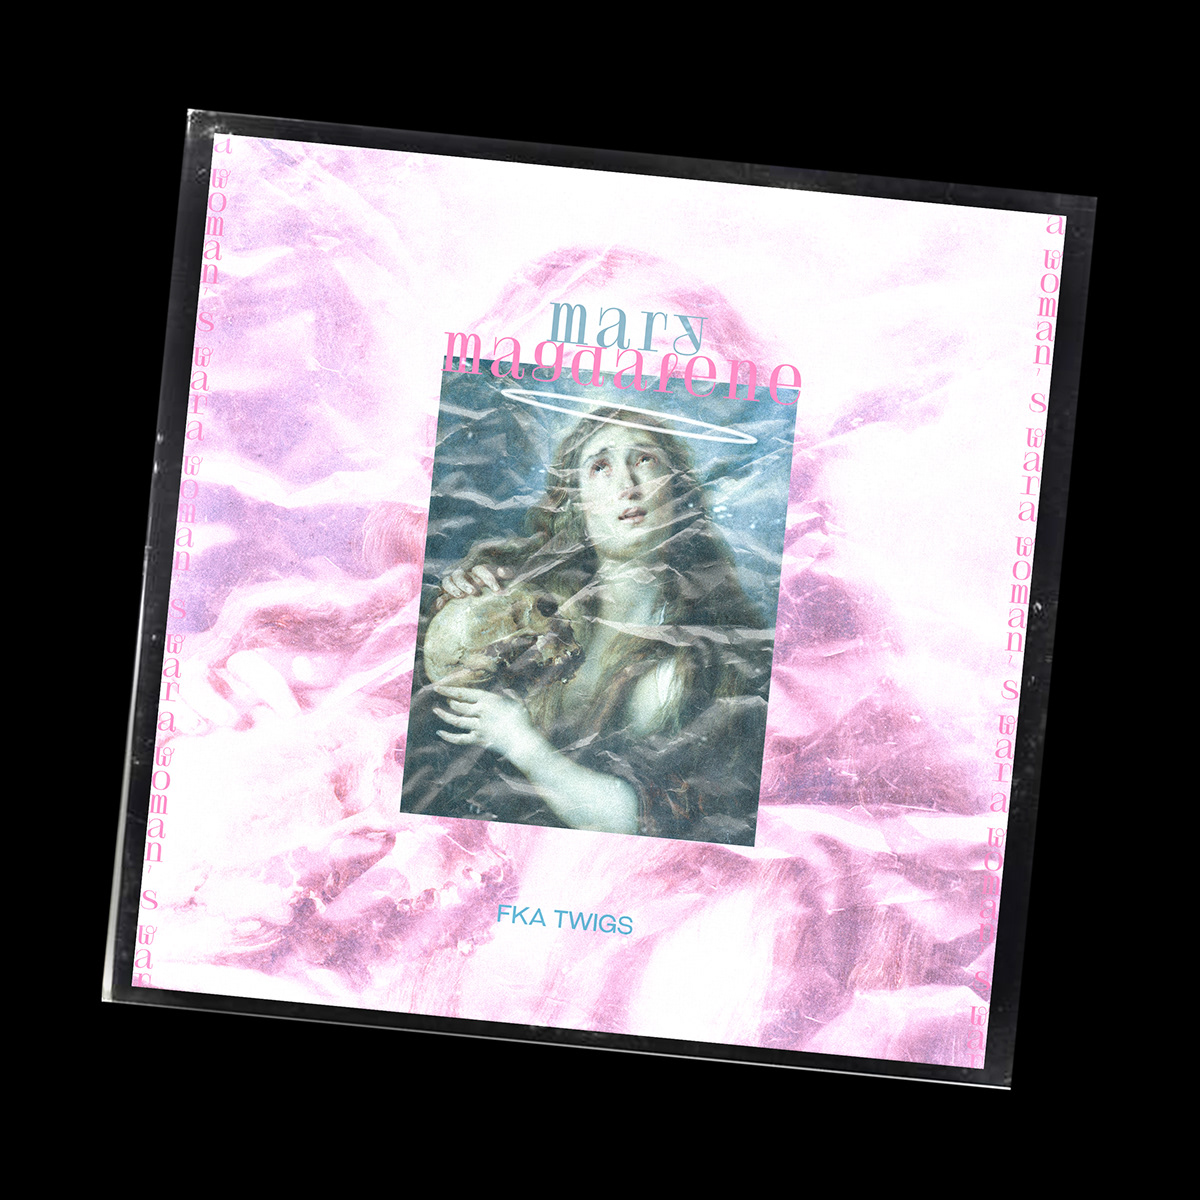 Album chelsea wolfe cover crystal castles FKA twigs frank ocean LP music Rammstein yung lean